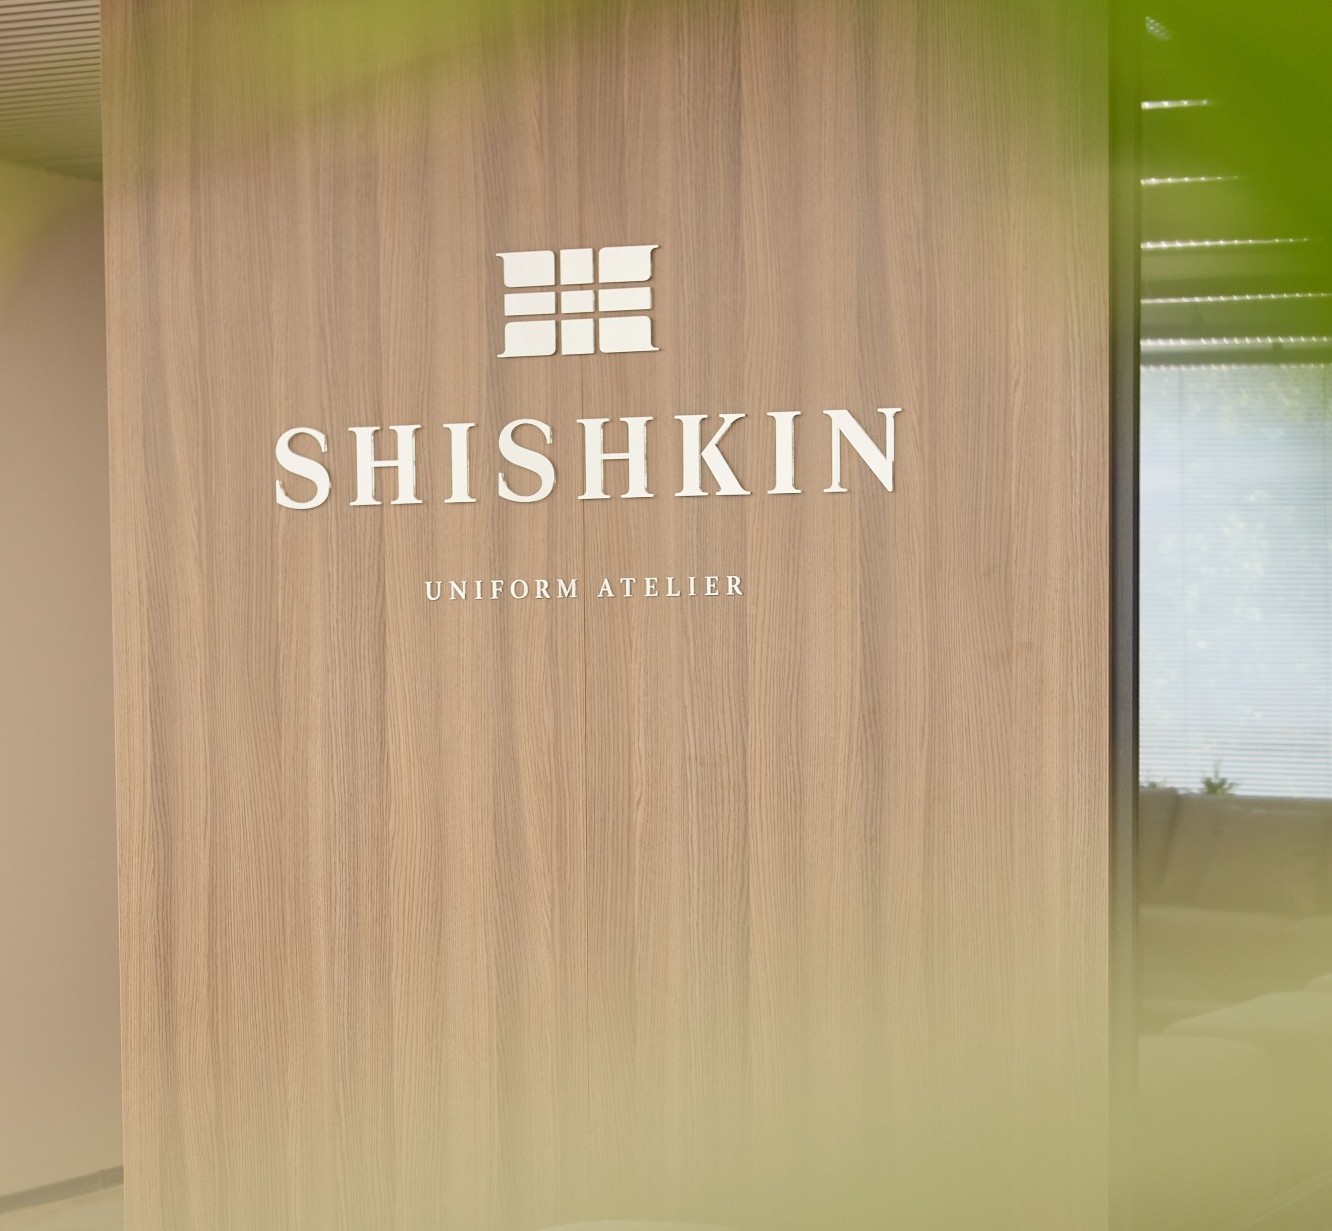 Ключевые идеи и символы бренда "SHISHKIN"